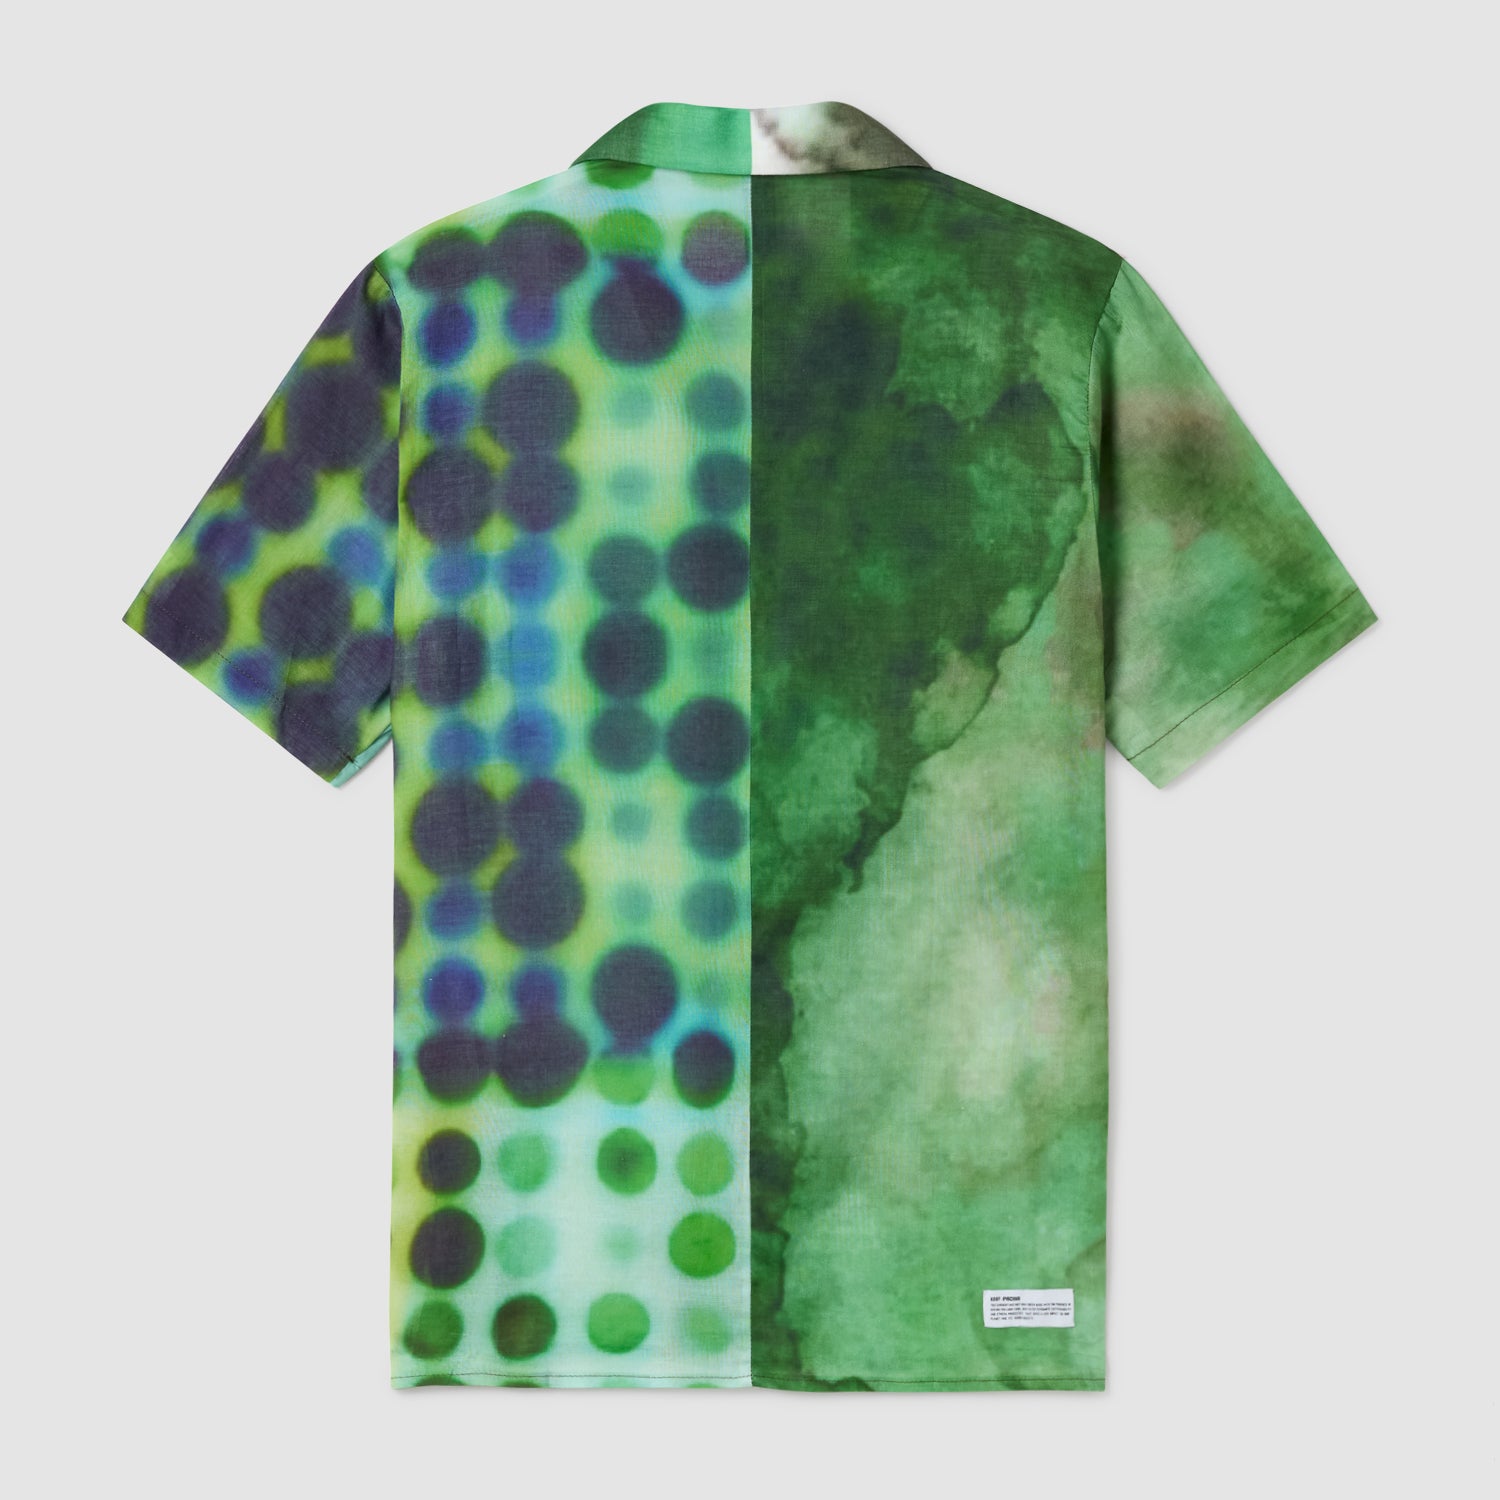 Pacha x KOBF - Grünes Unisex-Shirt